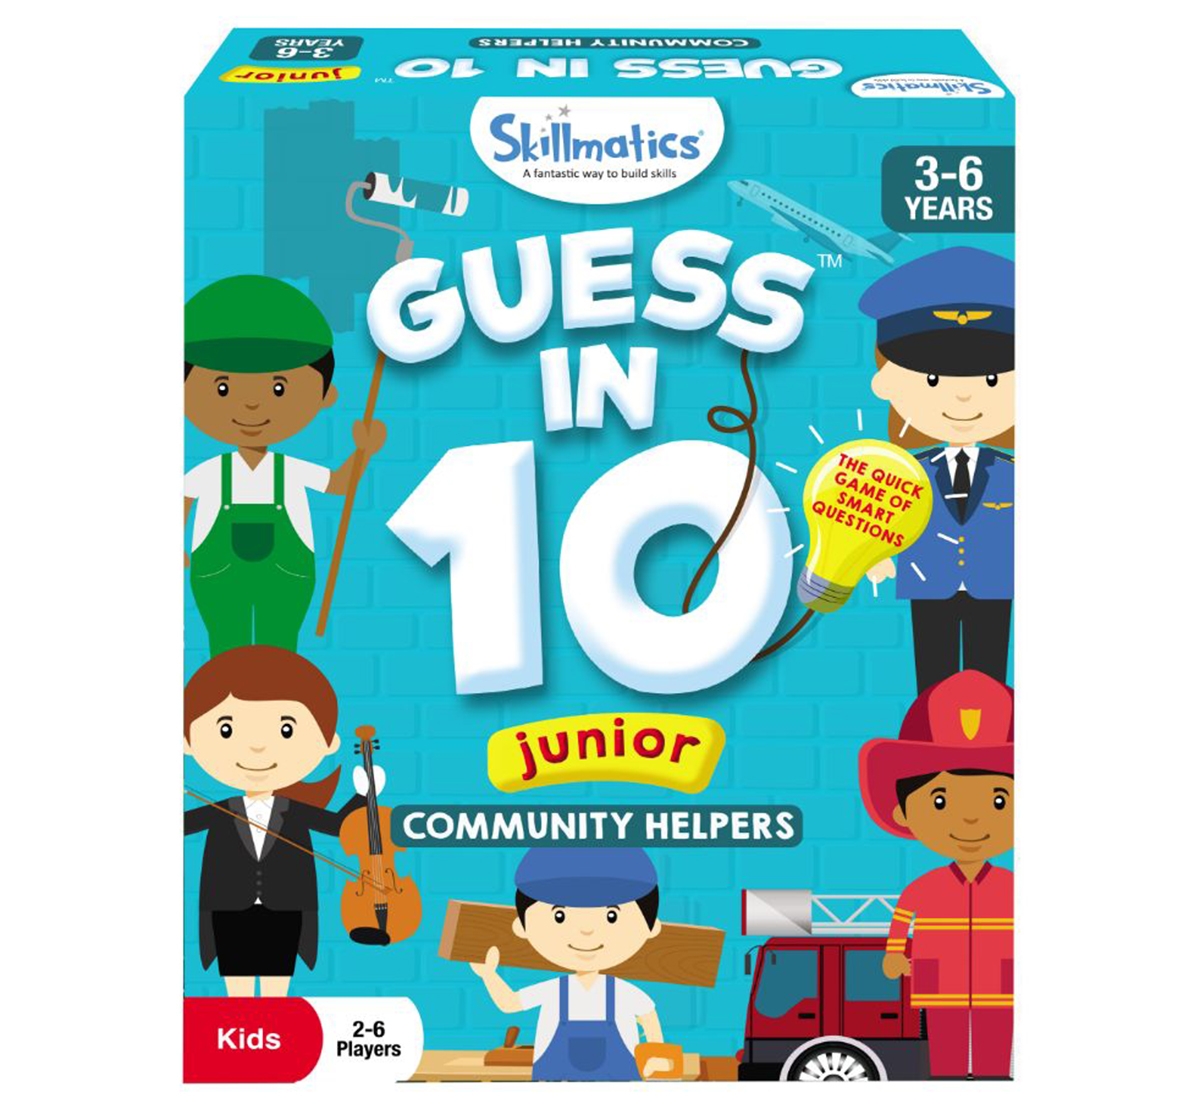 Skillmatics | Skillmatics Guess in 10 Junior Community Helpers Paper card game Multicolor 3Y+